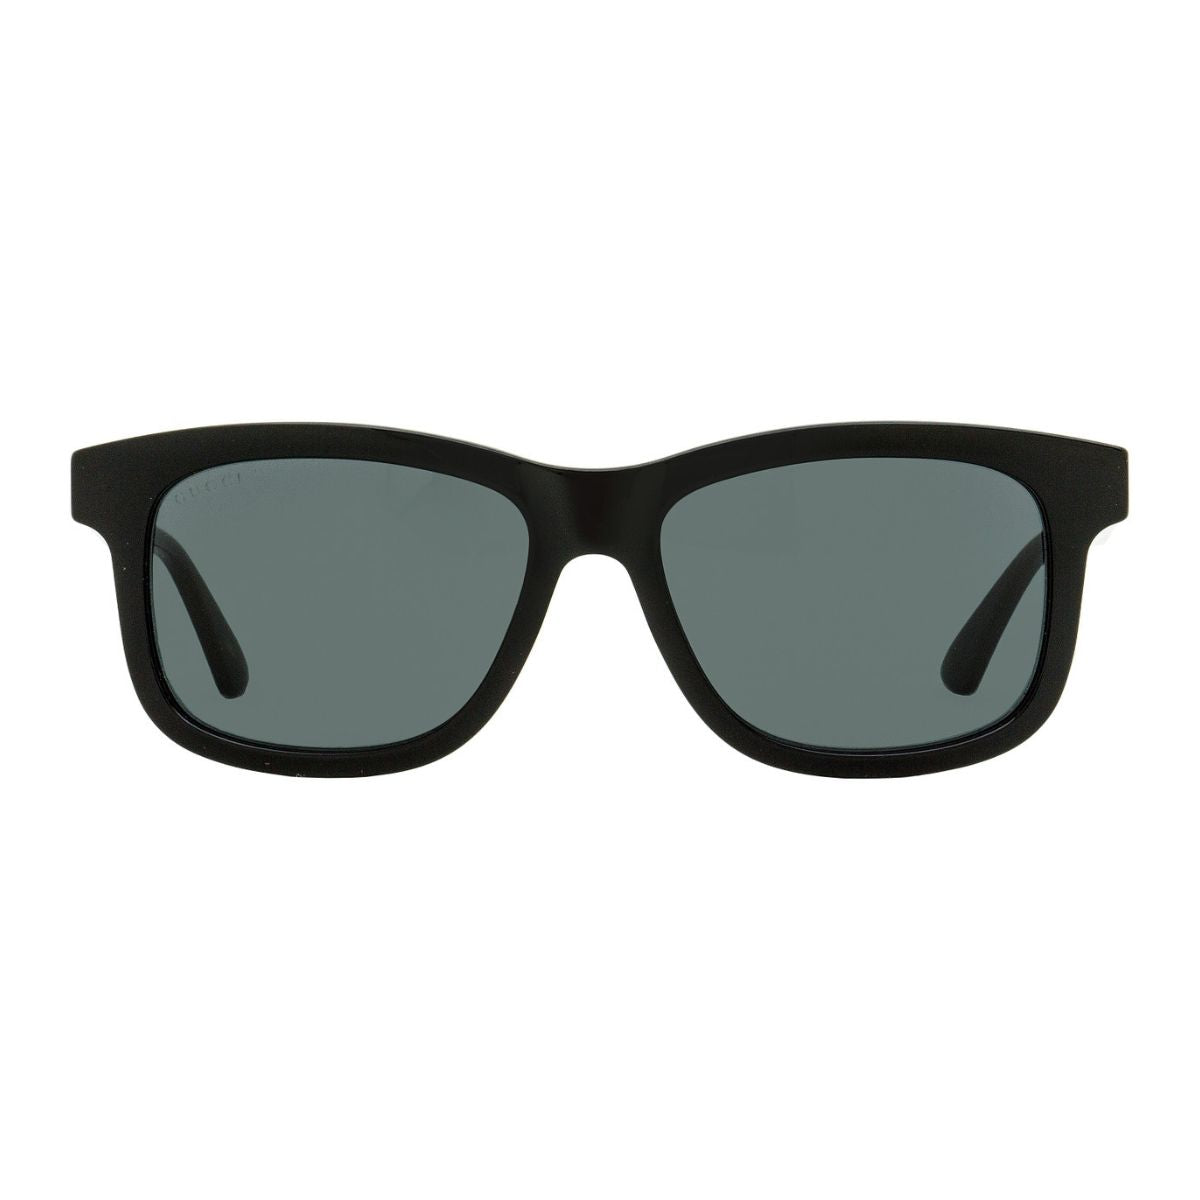 "Black Colour Square Gucci Sunglasses For Mens | Optorium"